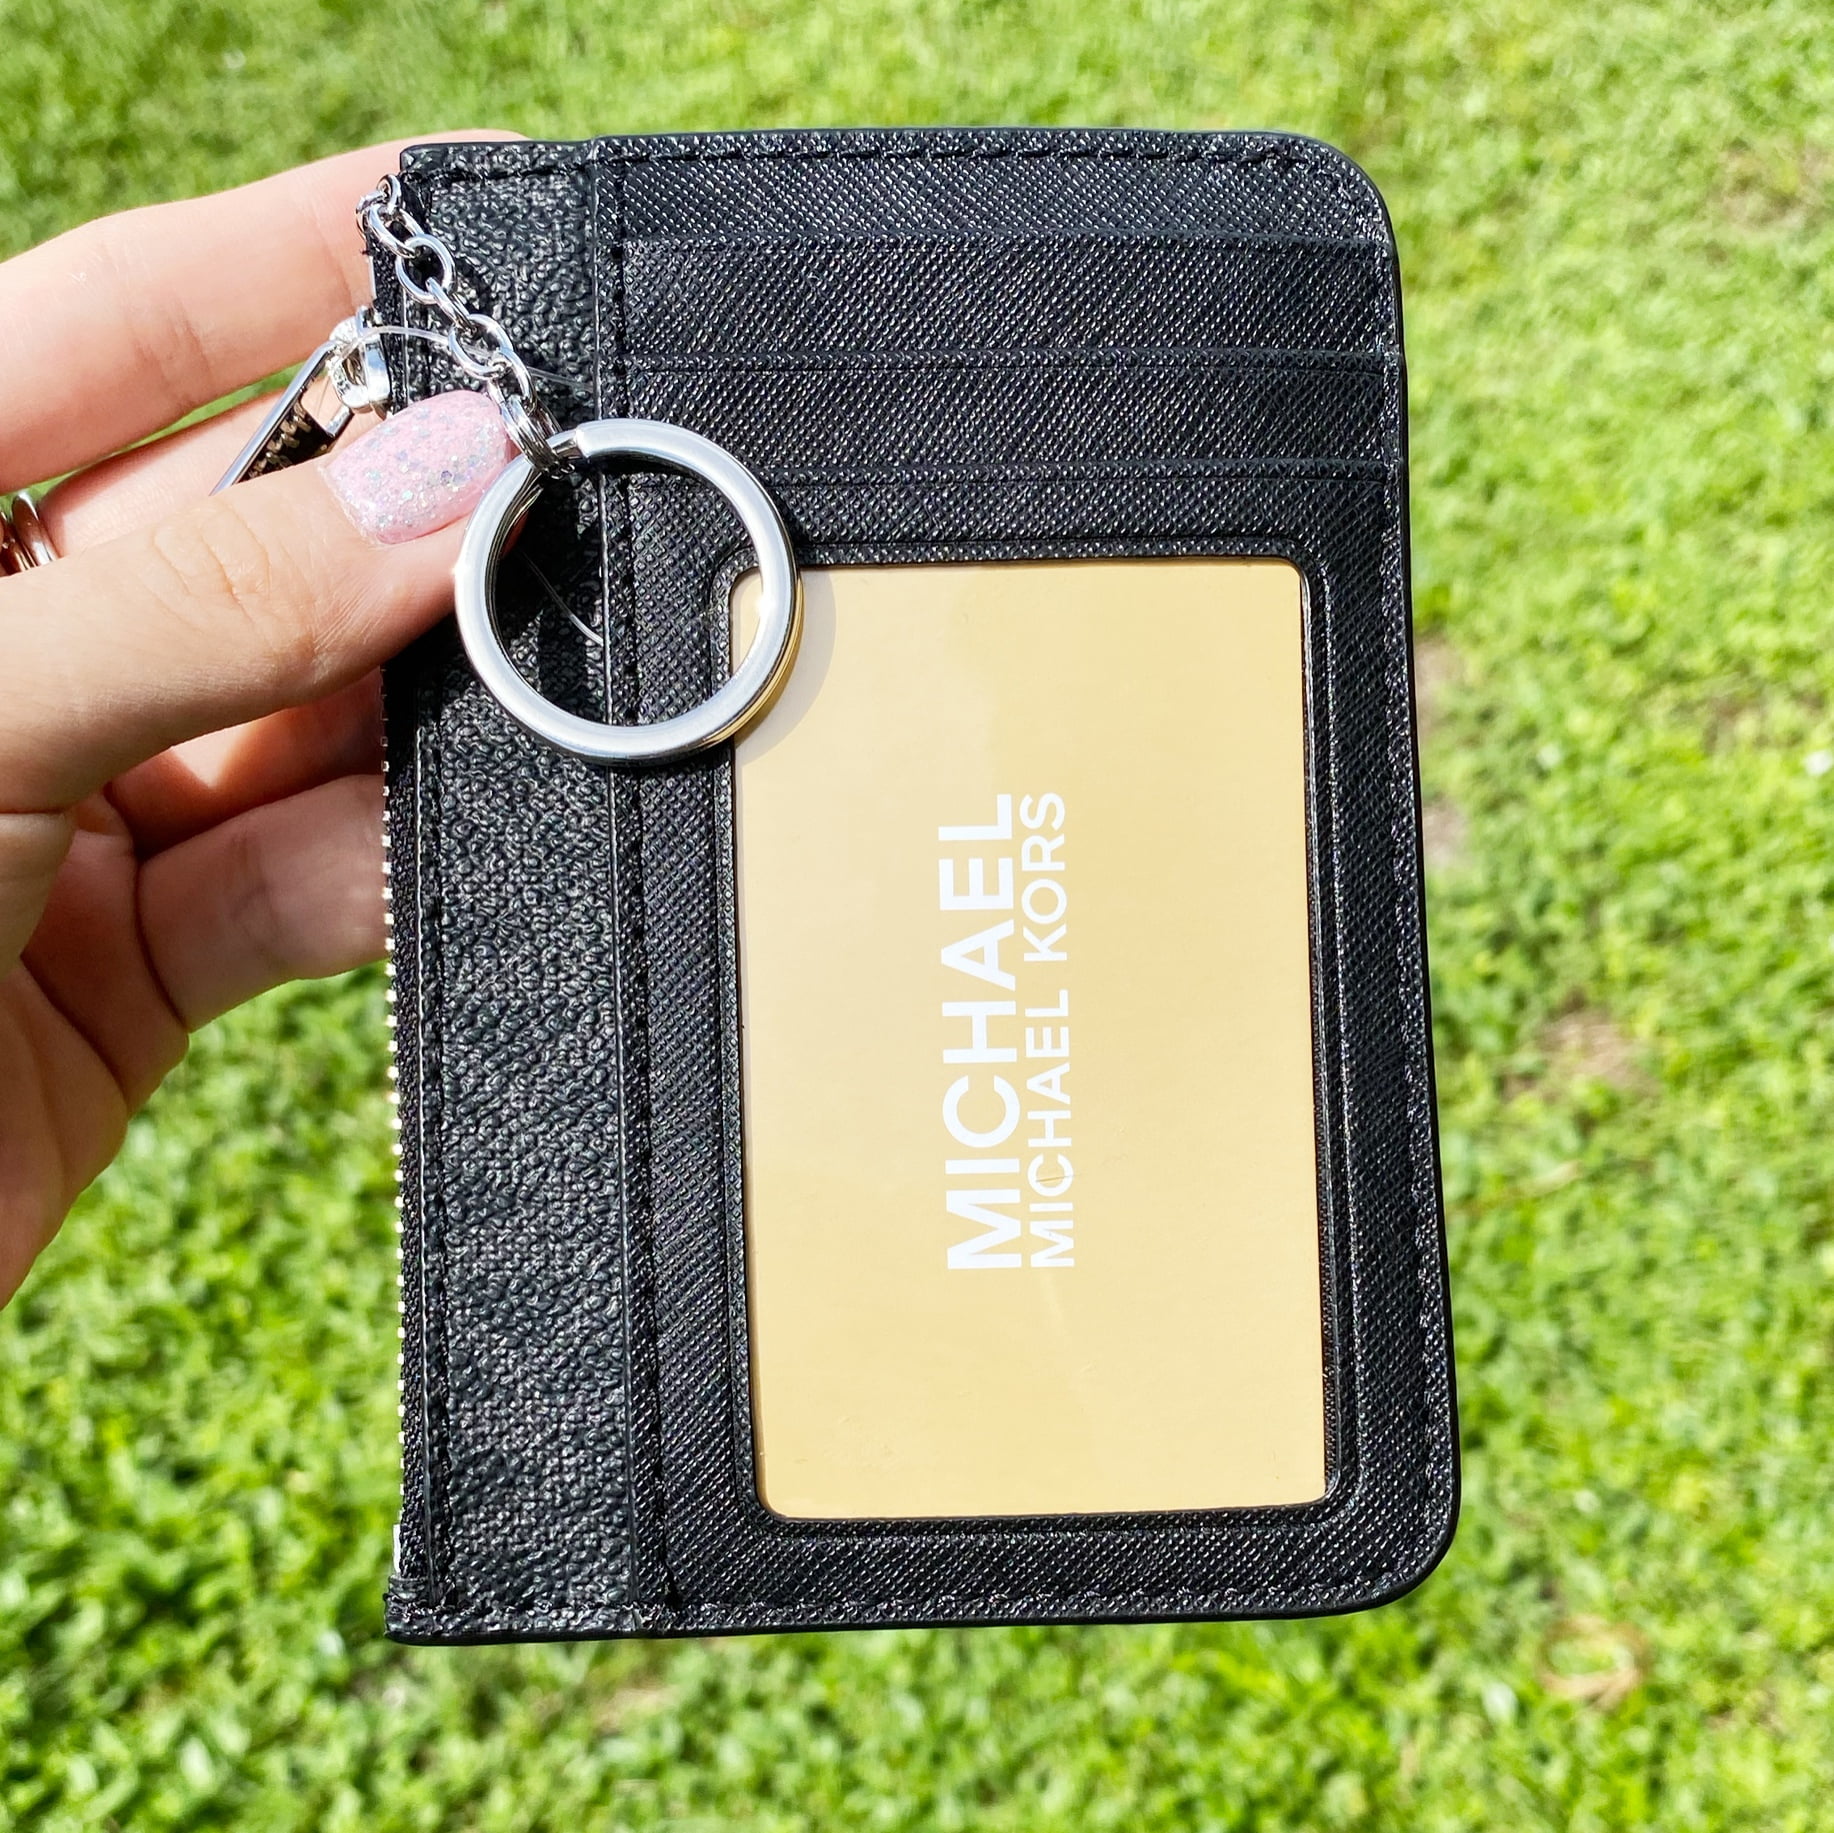 Meisterstück scenic key pouch 3cc - Luxury Card holders